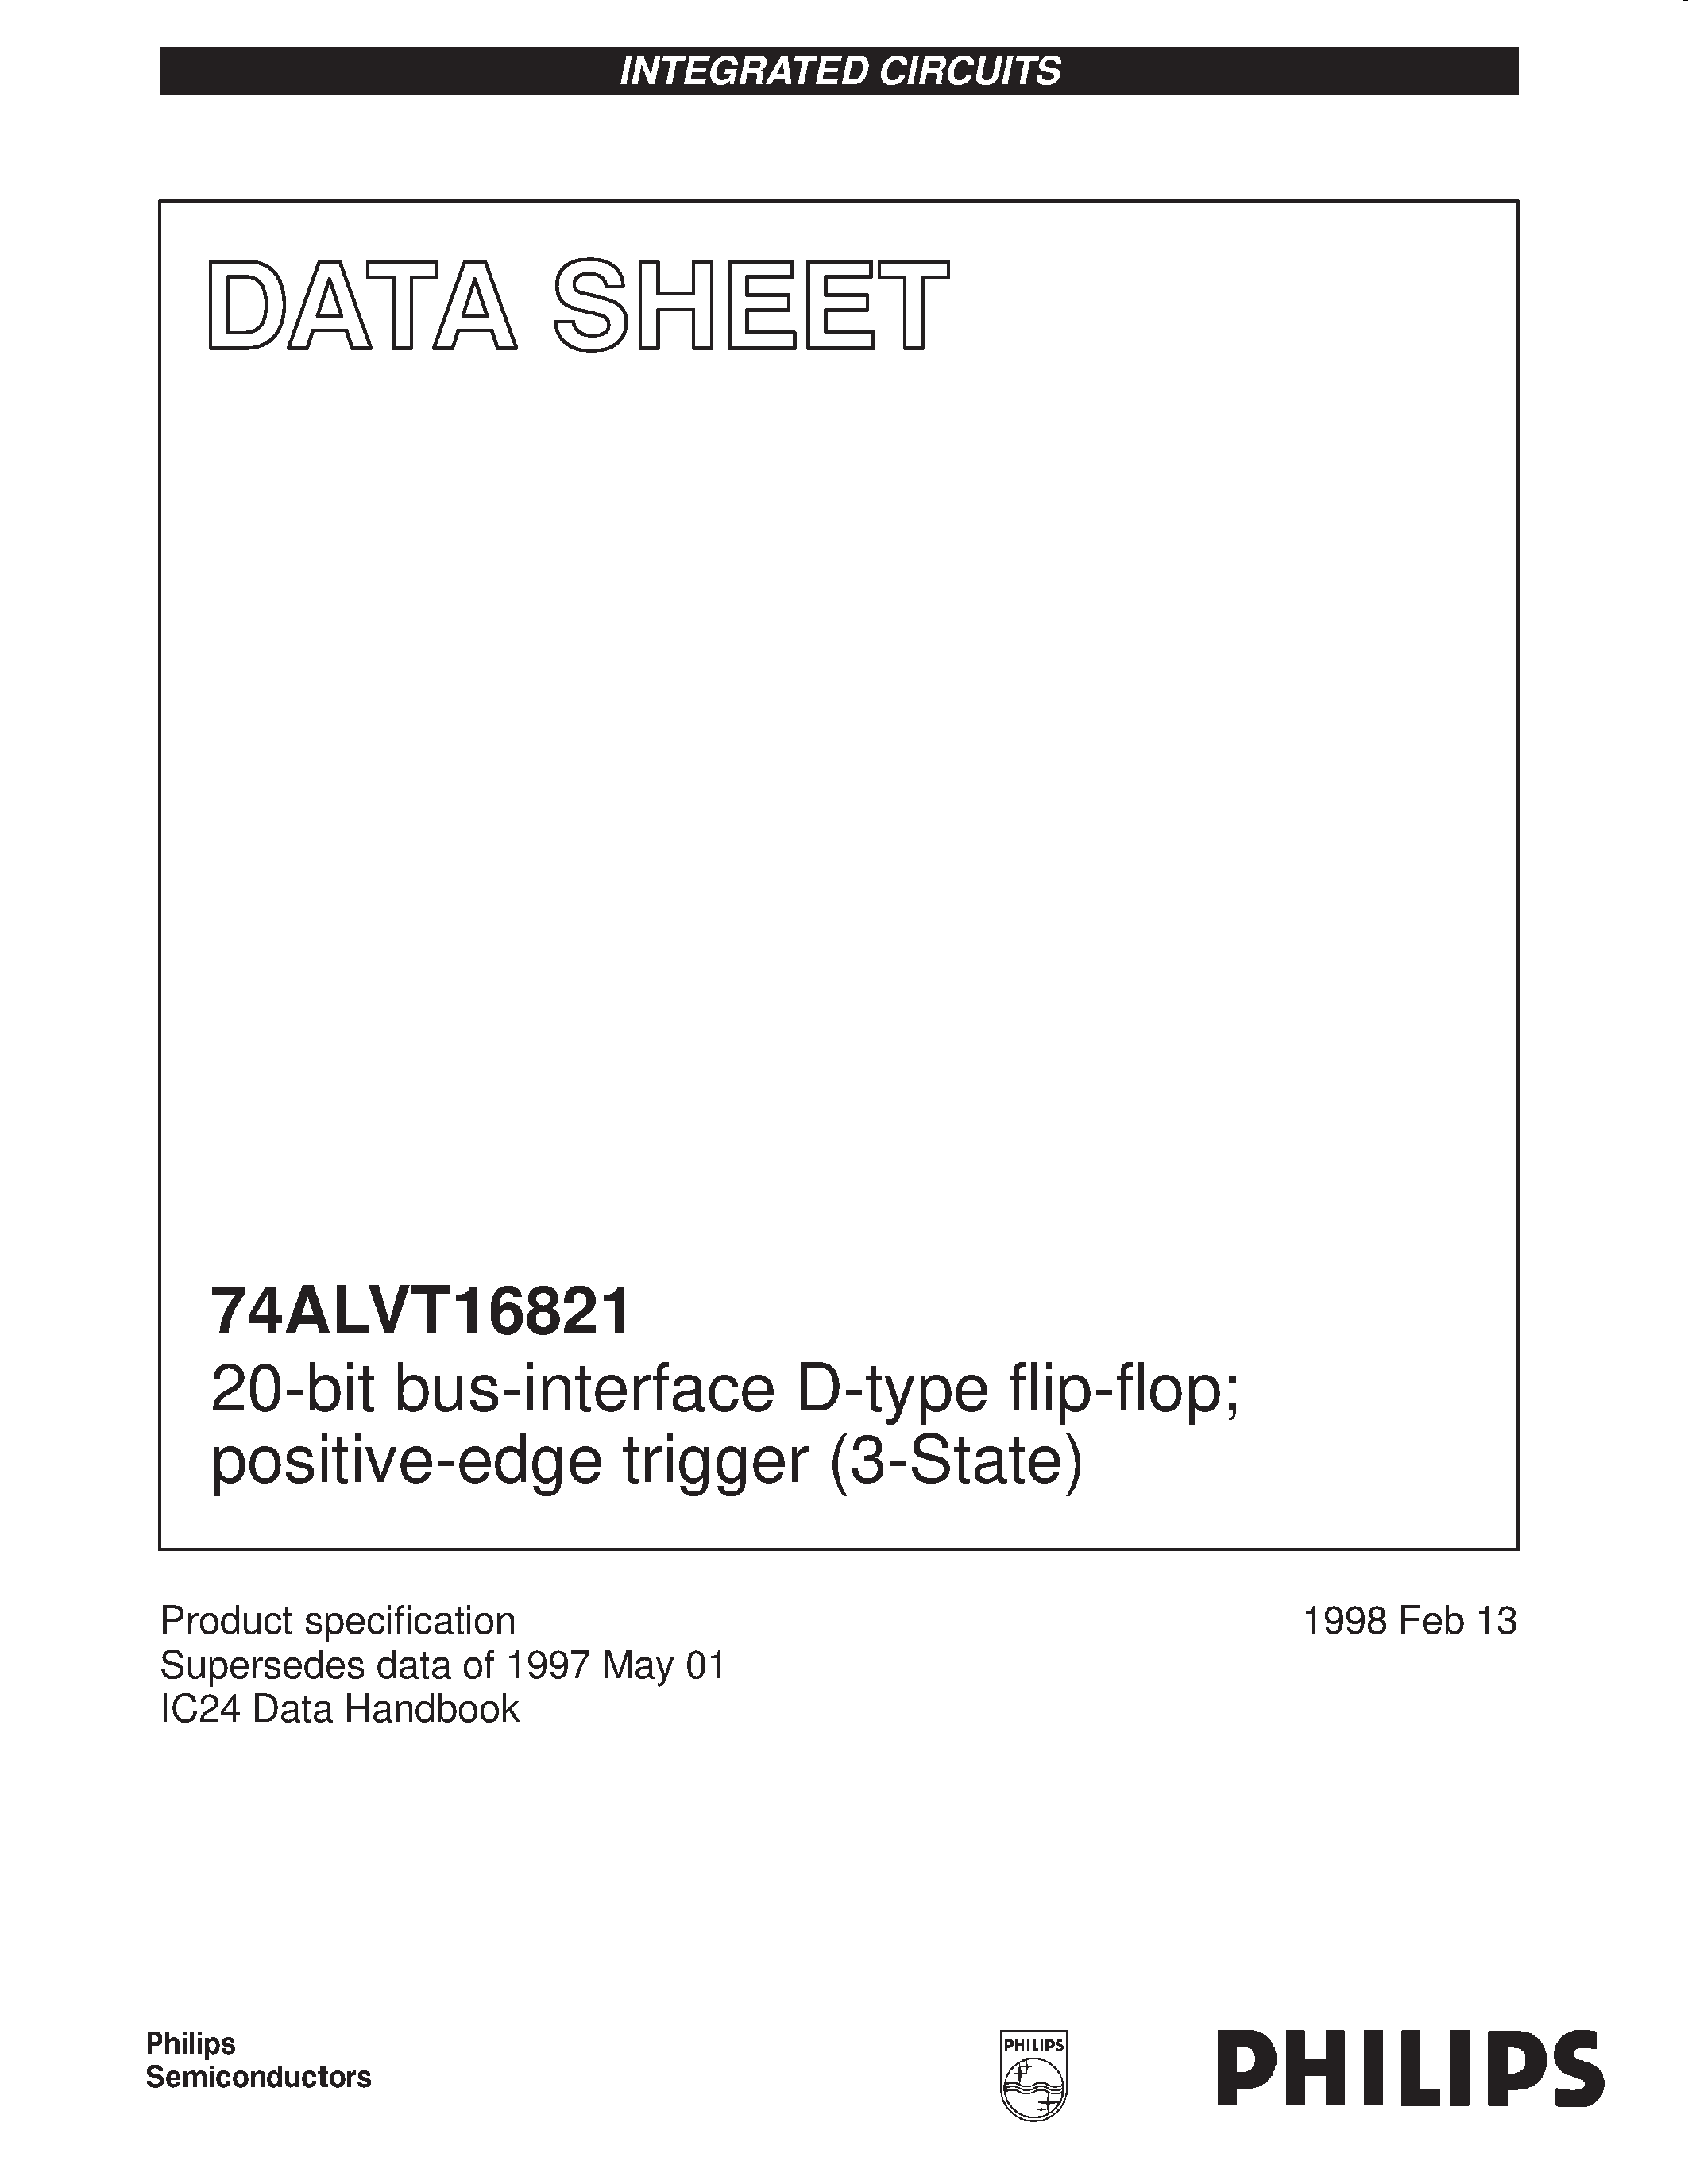 Datasheet 74ALVT16821DL - 20-bit bus-interface D-type flip-flop; positive-edge trigger 3-State page 1